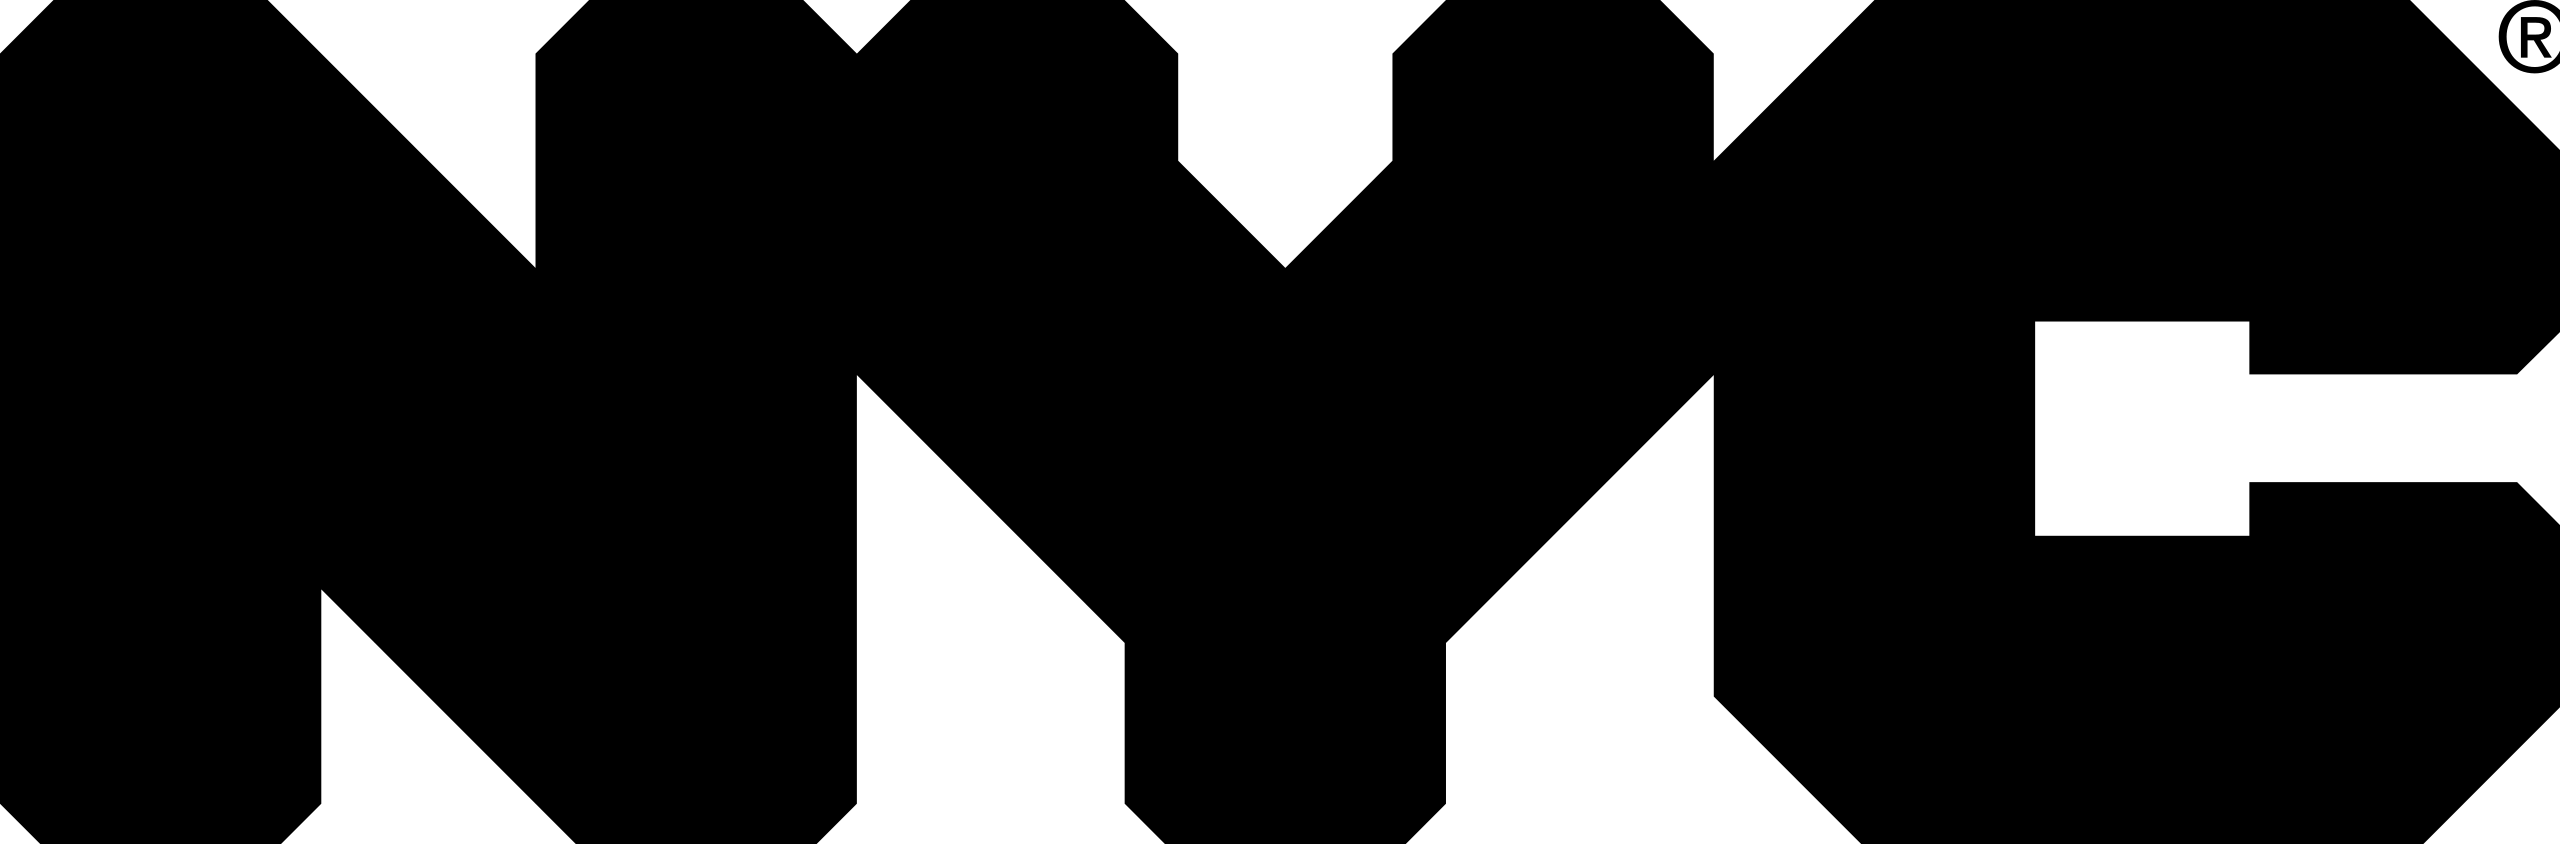 NYC_Logo